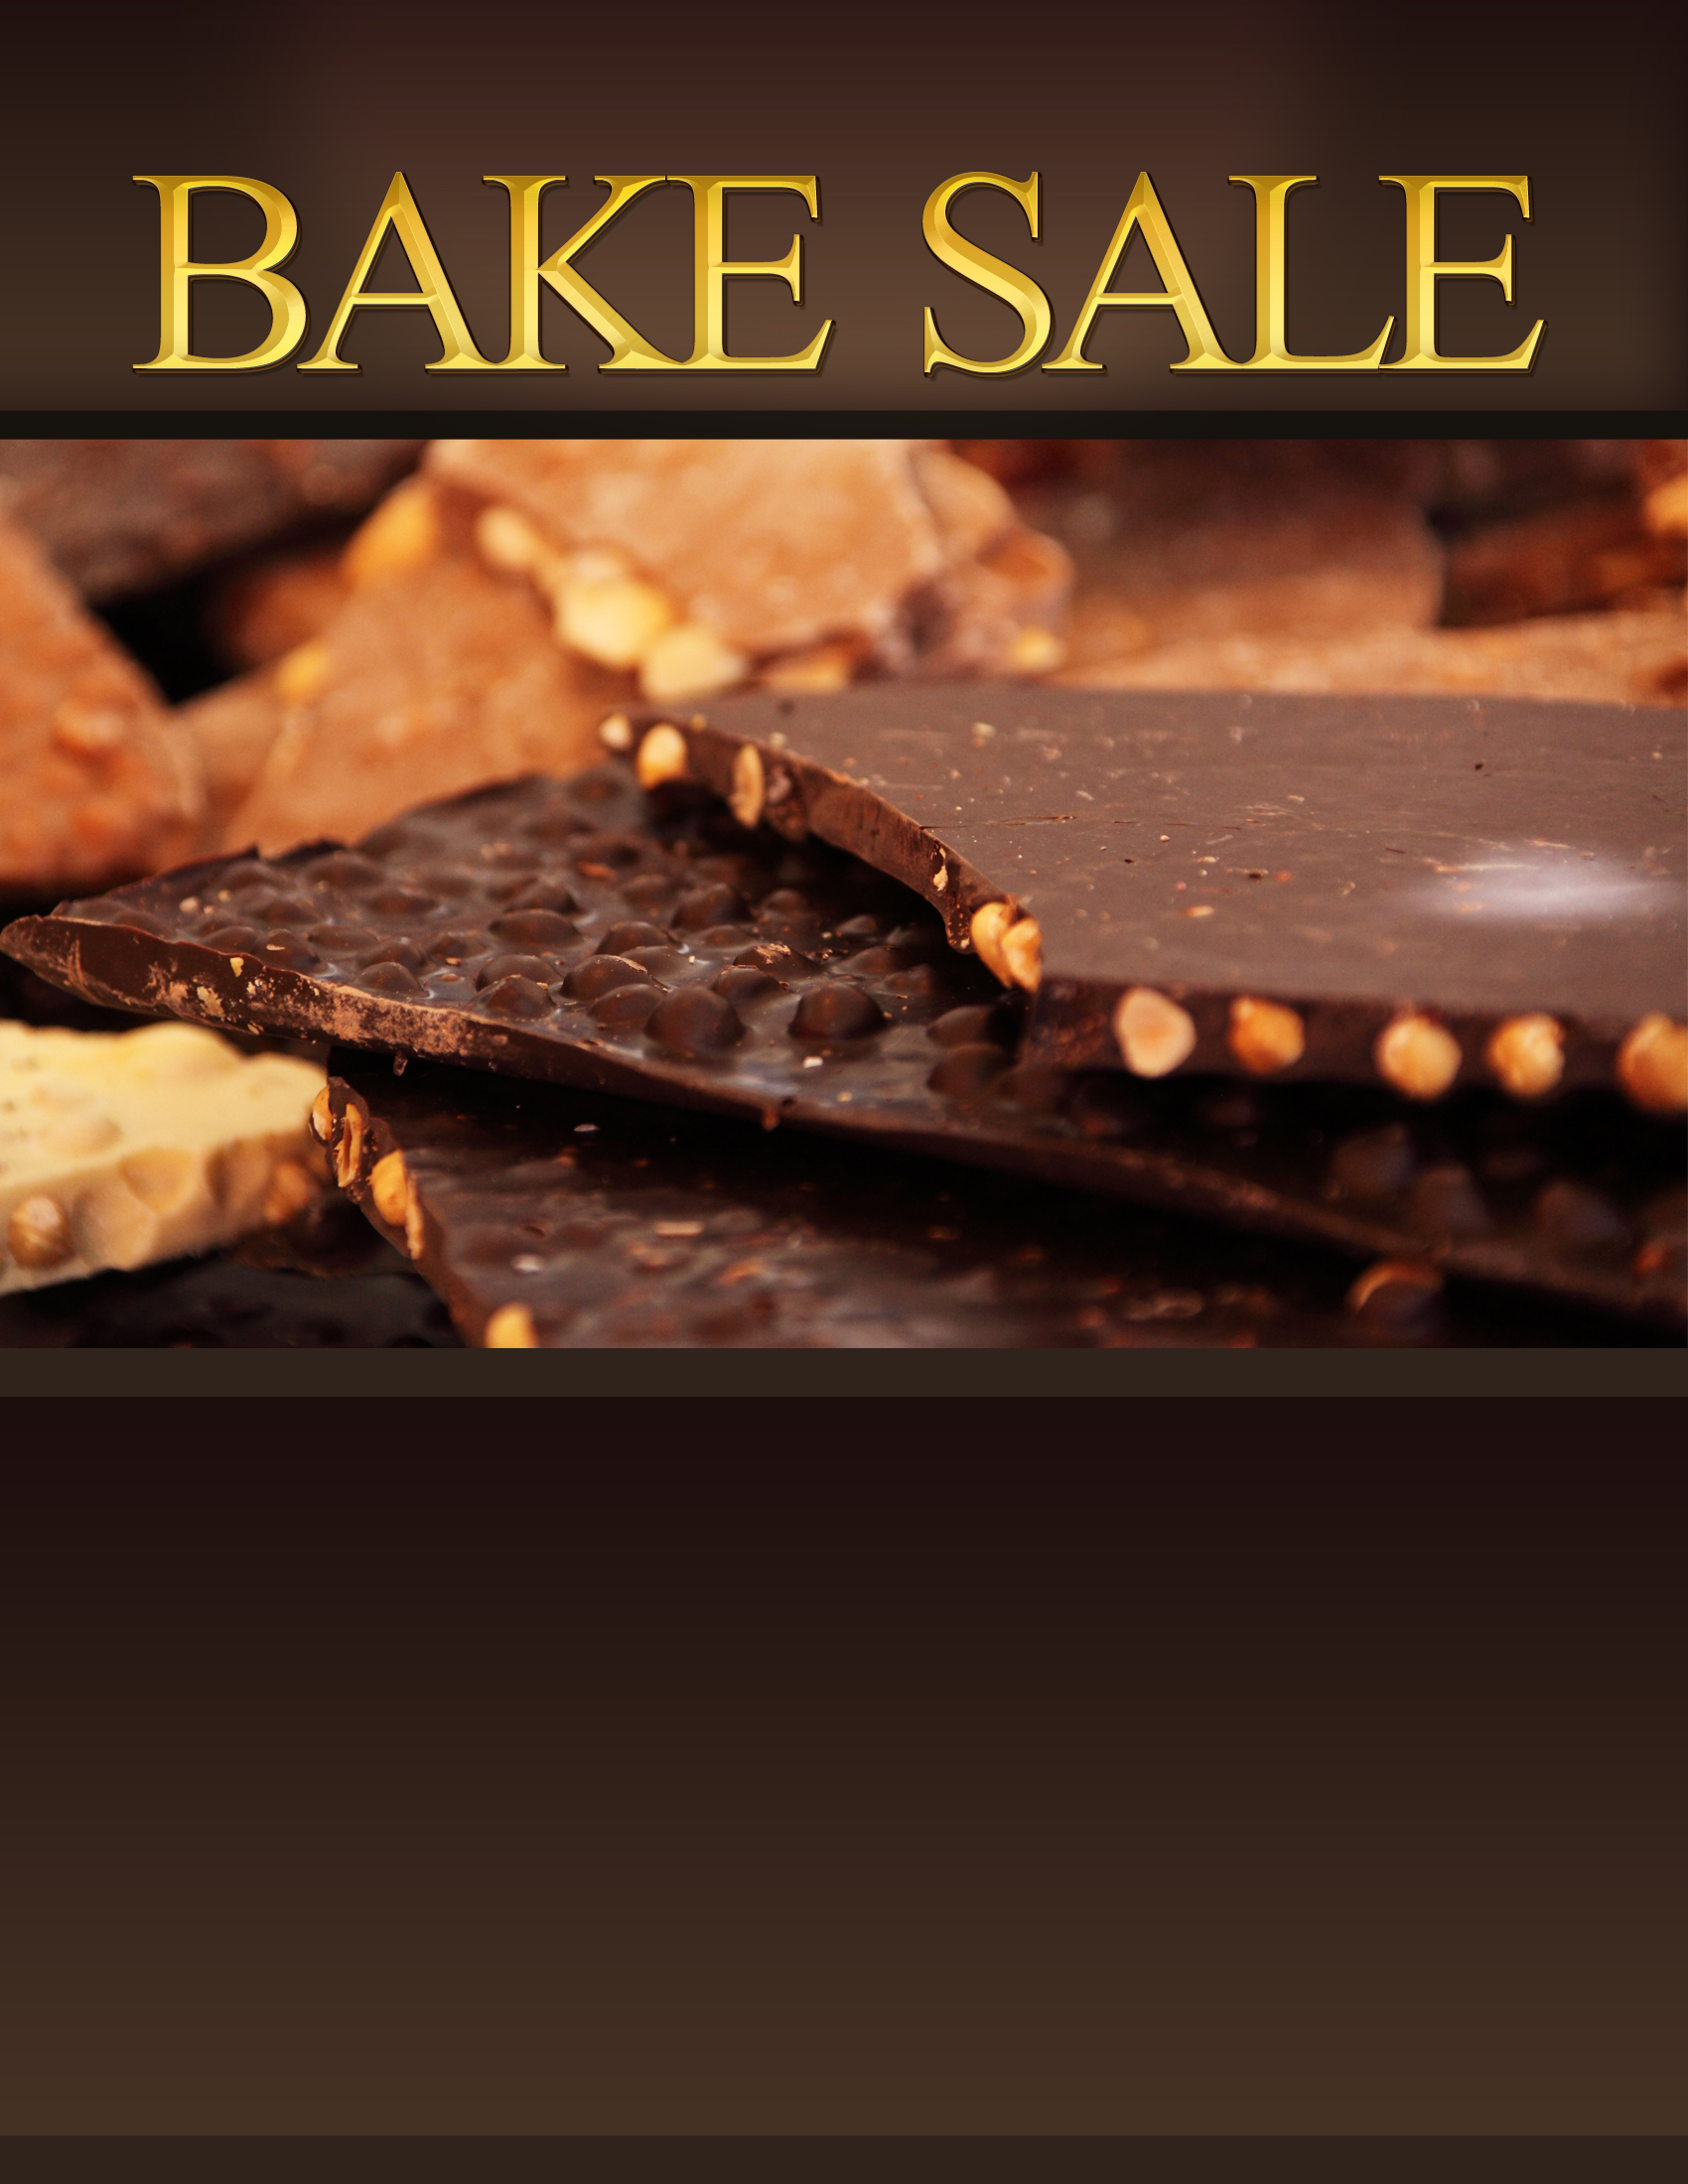 Bake Sale Flyer Free Template